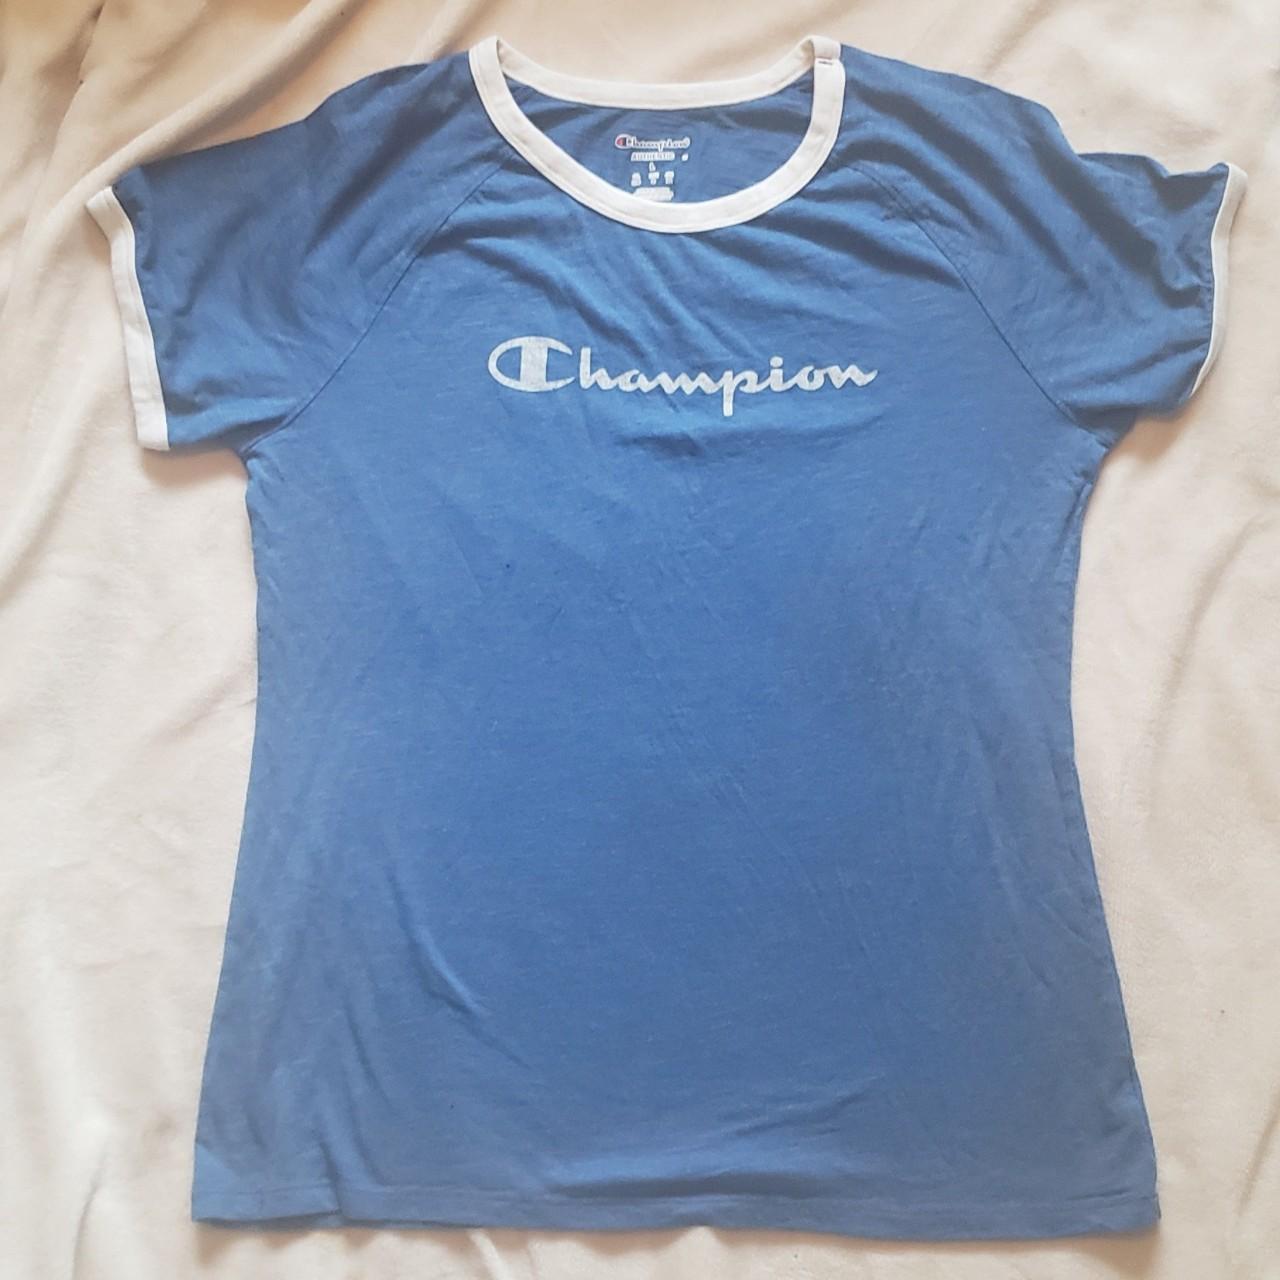 Champion Women's White and Blue T-shirt